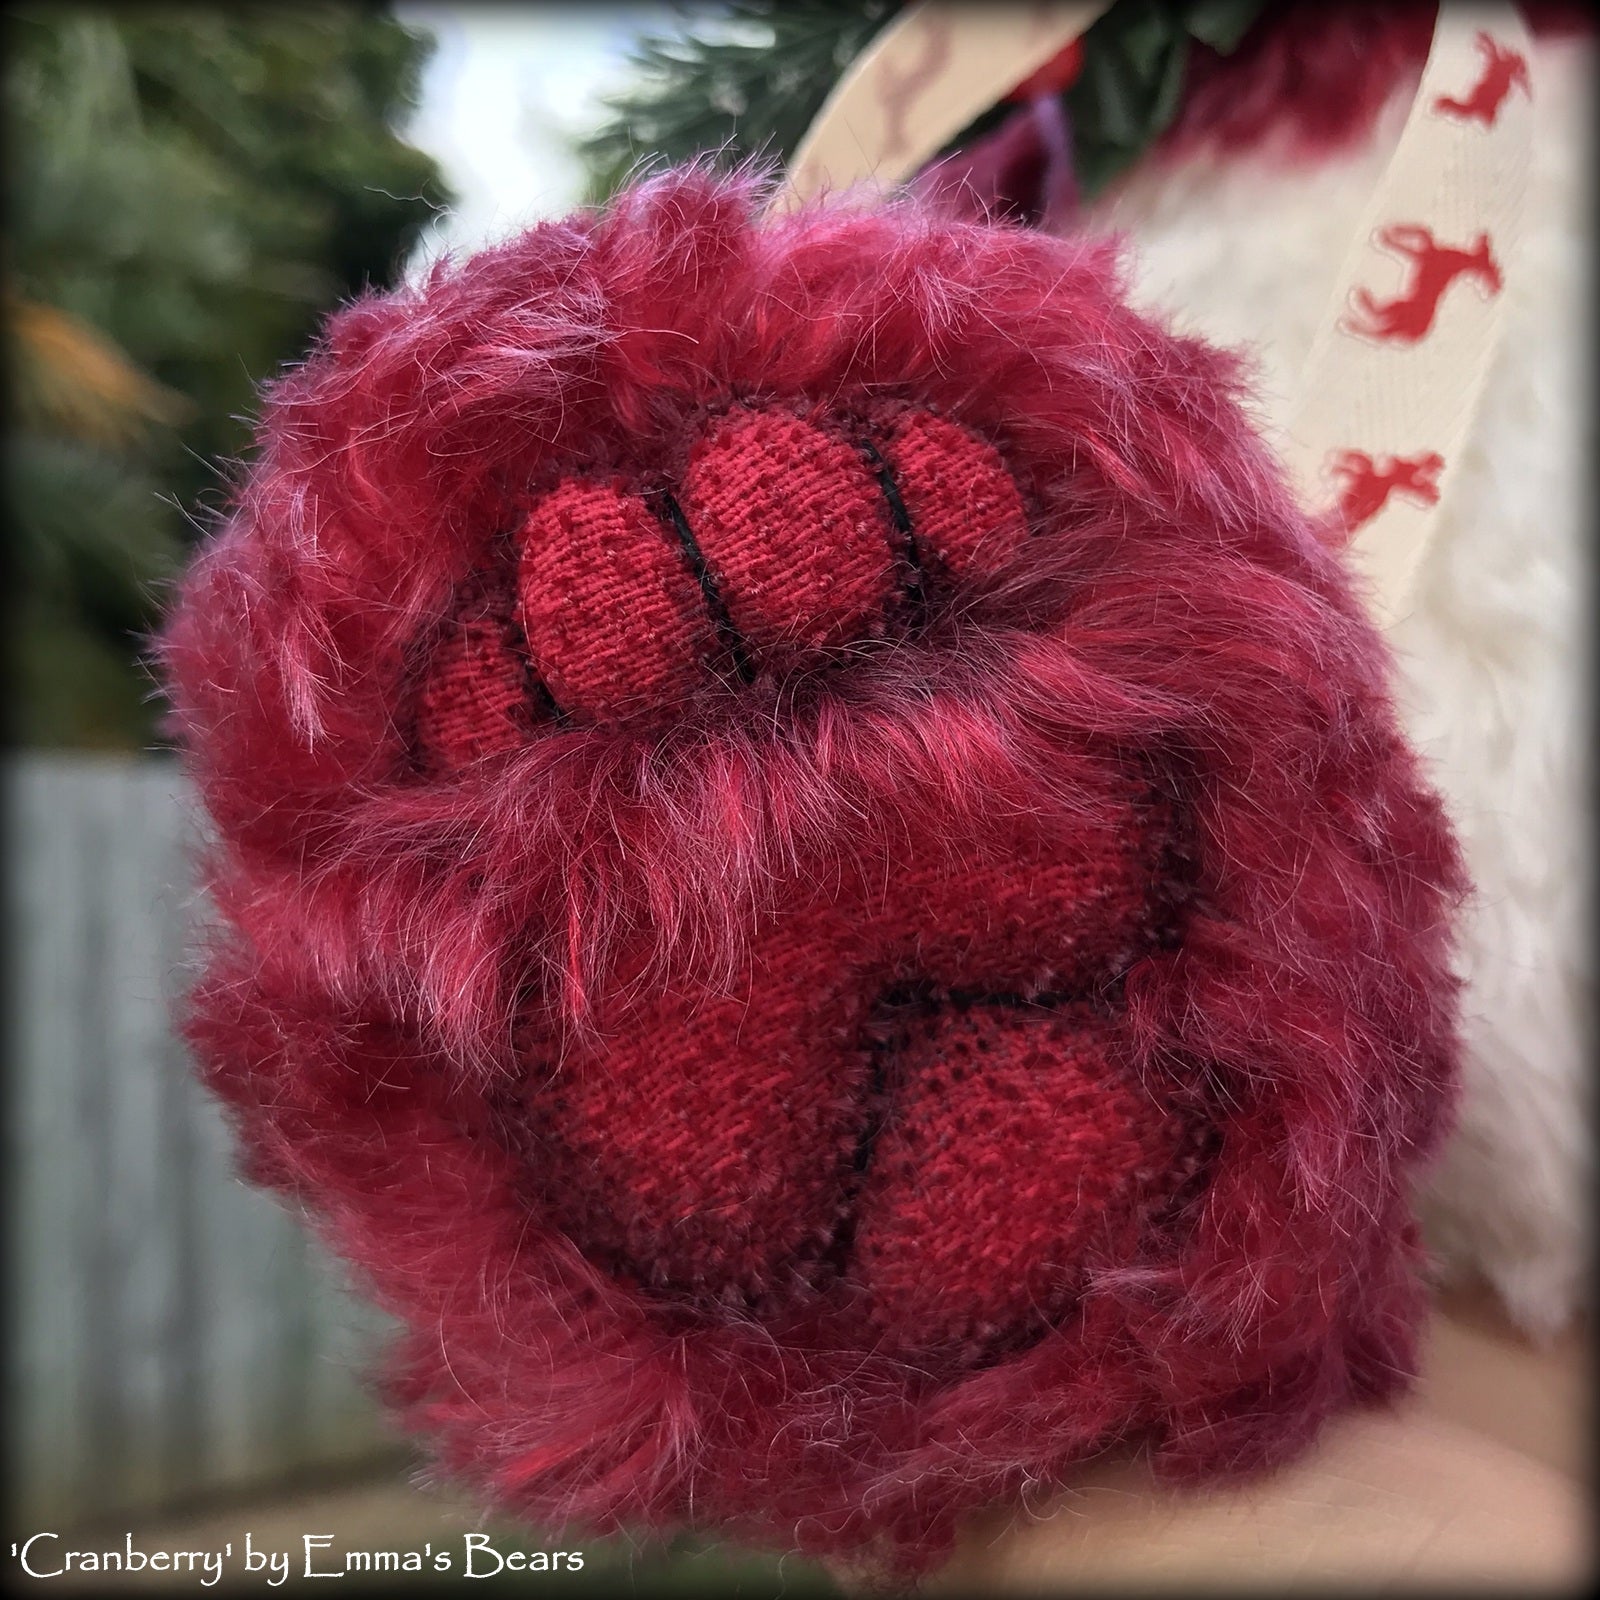 Cranberry - 15" hand dyed mohair Christmas artist bear by Emma's Bears - OOAK